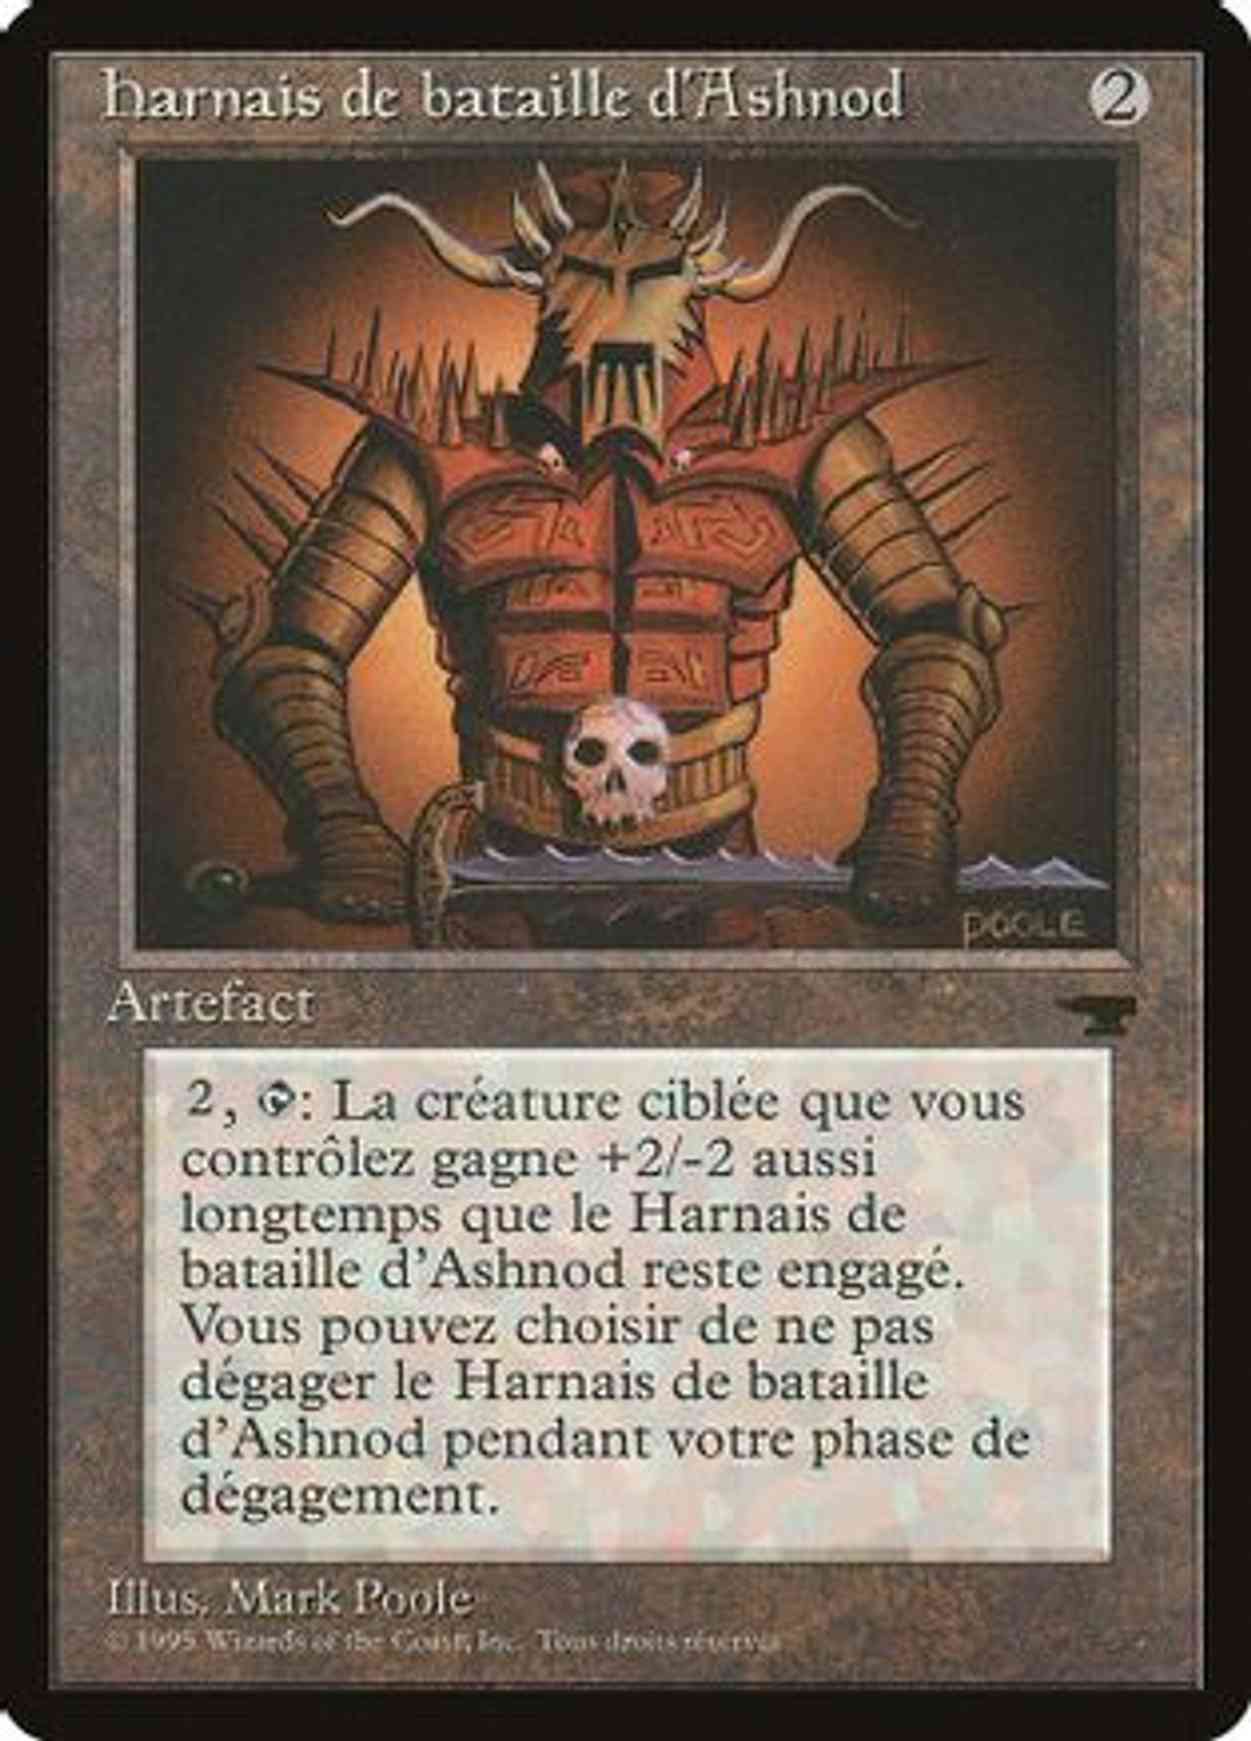 Ashnod's Battle Gear (French) - "Harnais de bataille d'Ashnod" magic card front